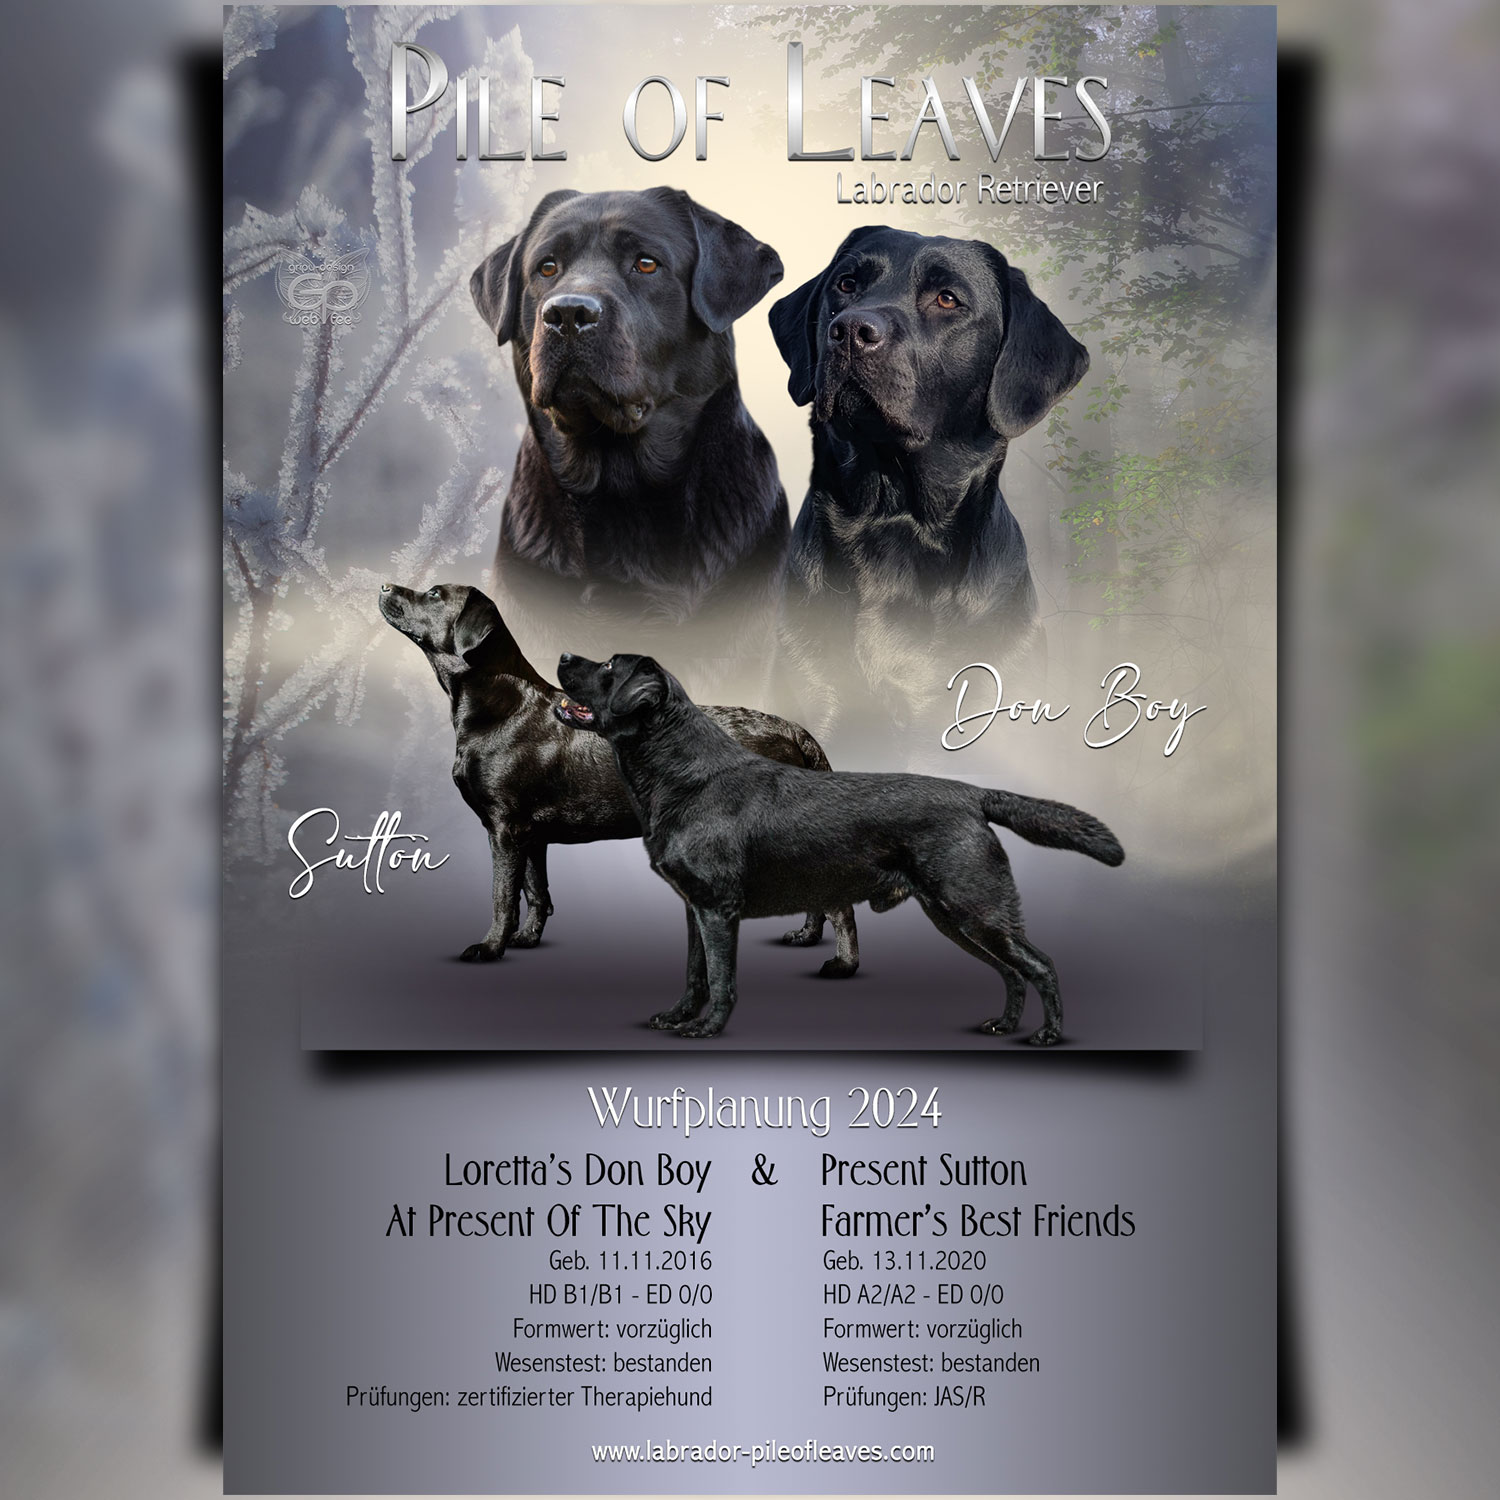 Collage / Wurfankündigung Pile of Leaves Labrador Retriever